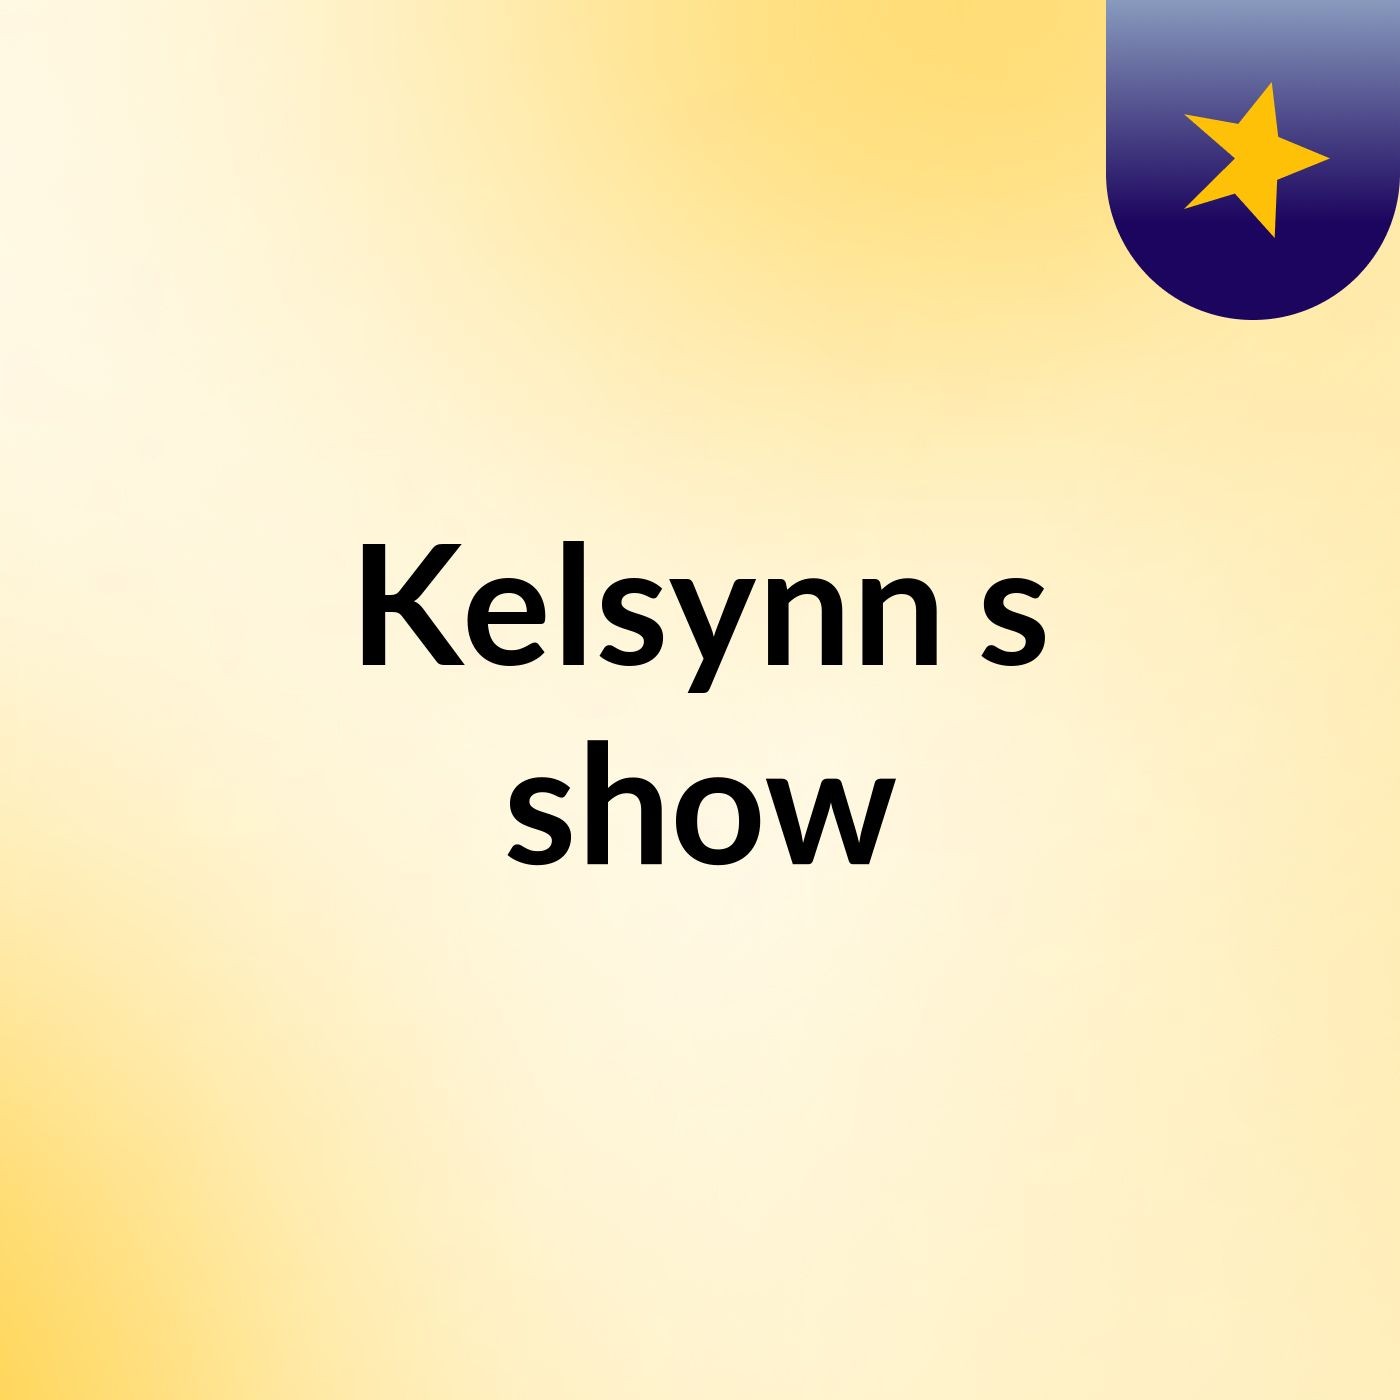 Kelsynn's show